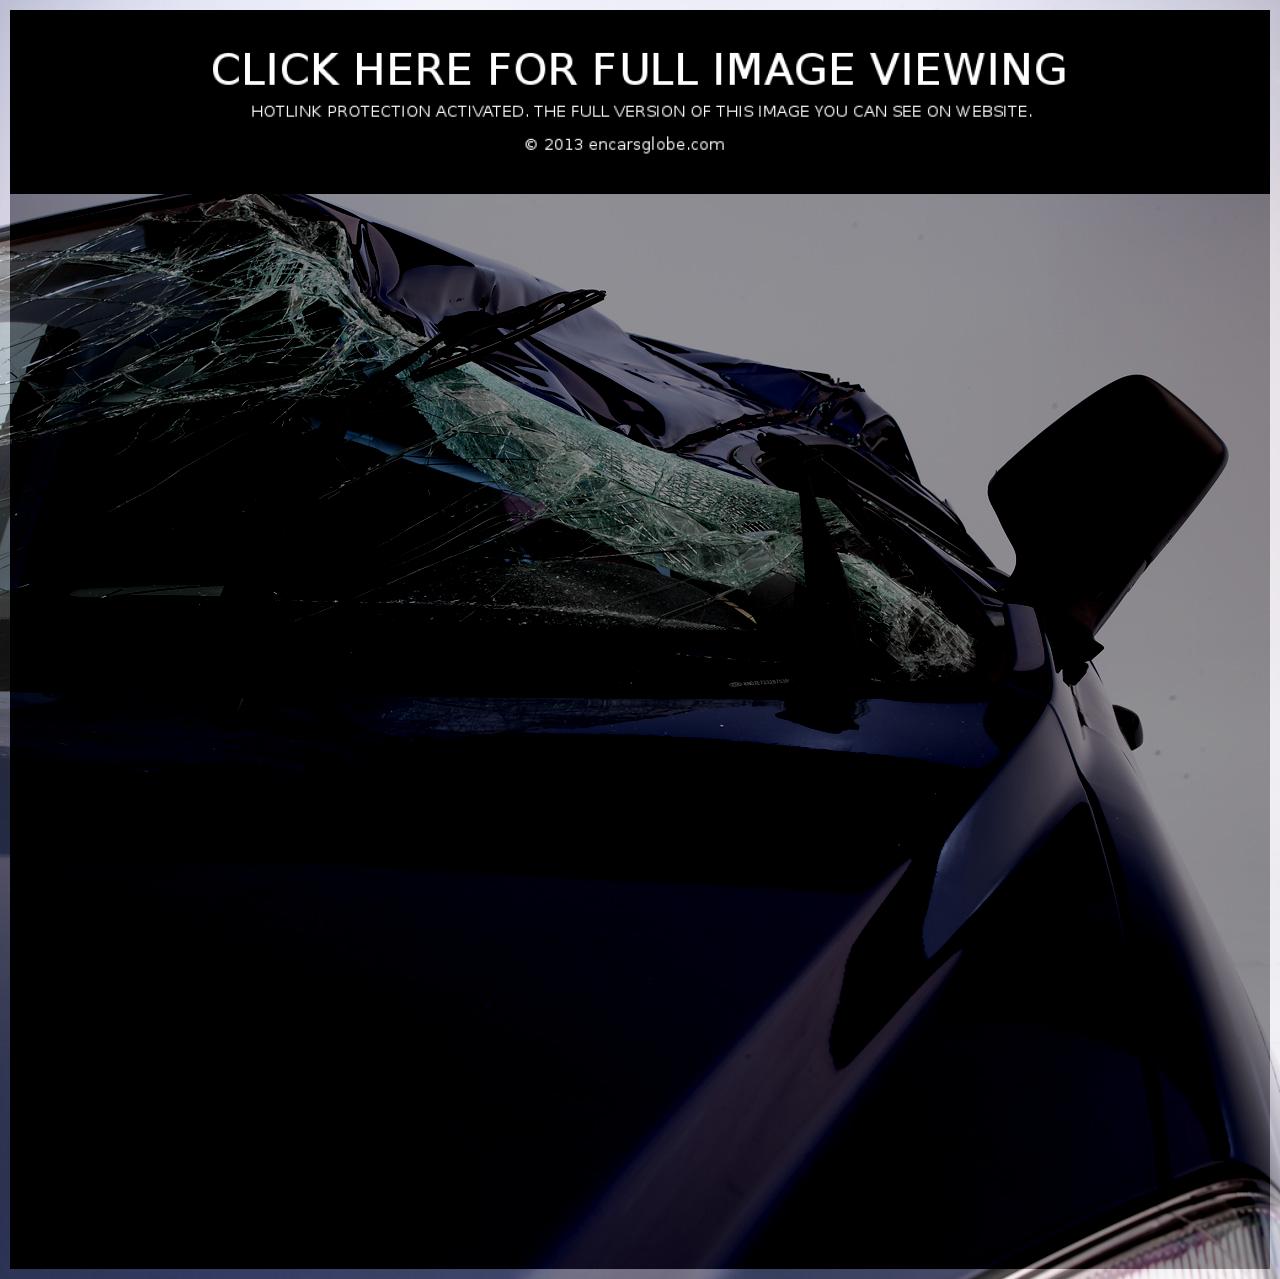 Kia Sportage Pro 20 GL Photo Gallery: Photo #03 out of 8, Image ...